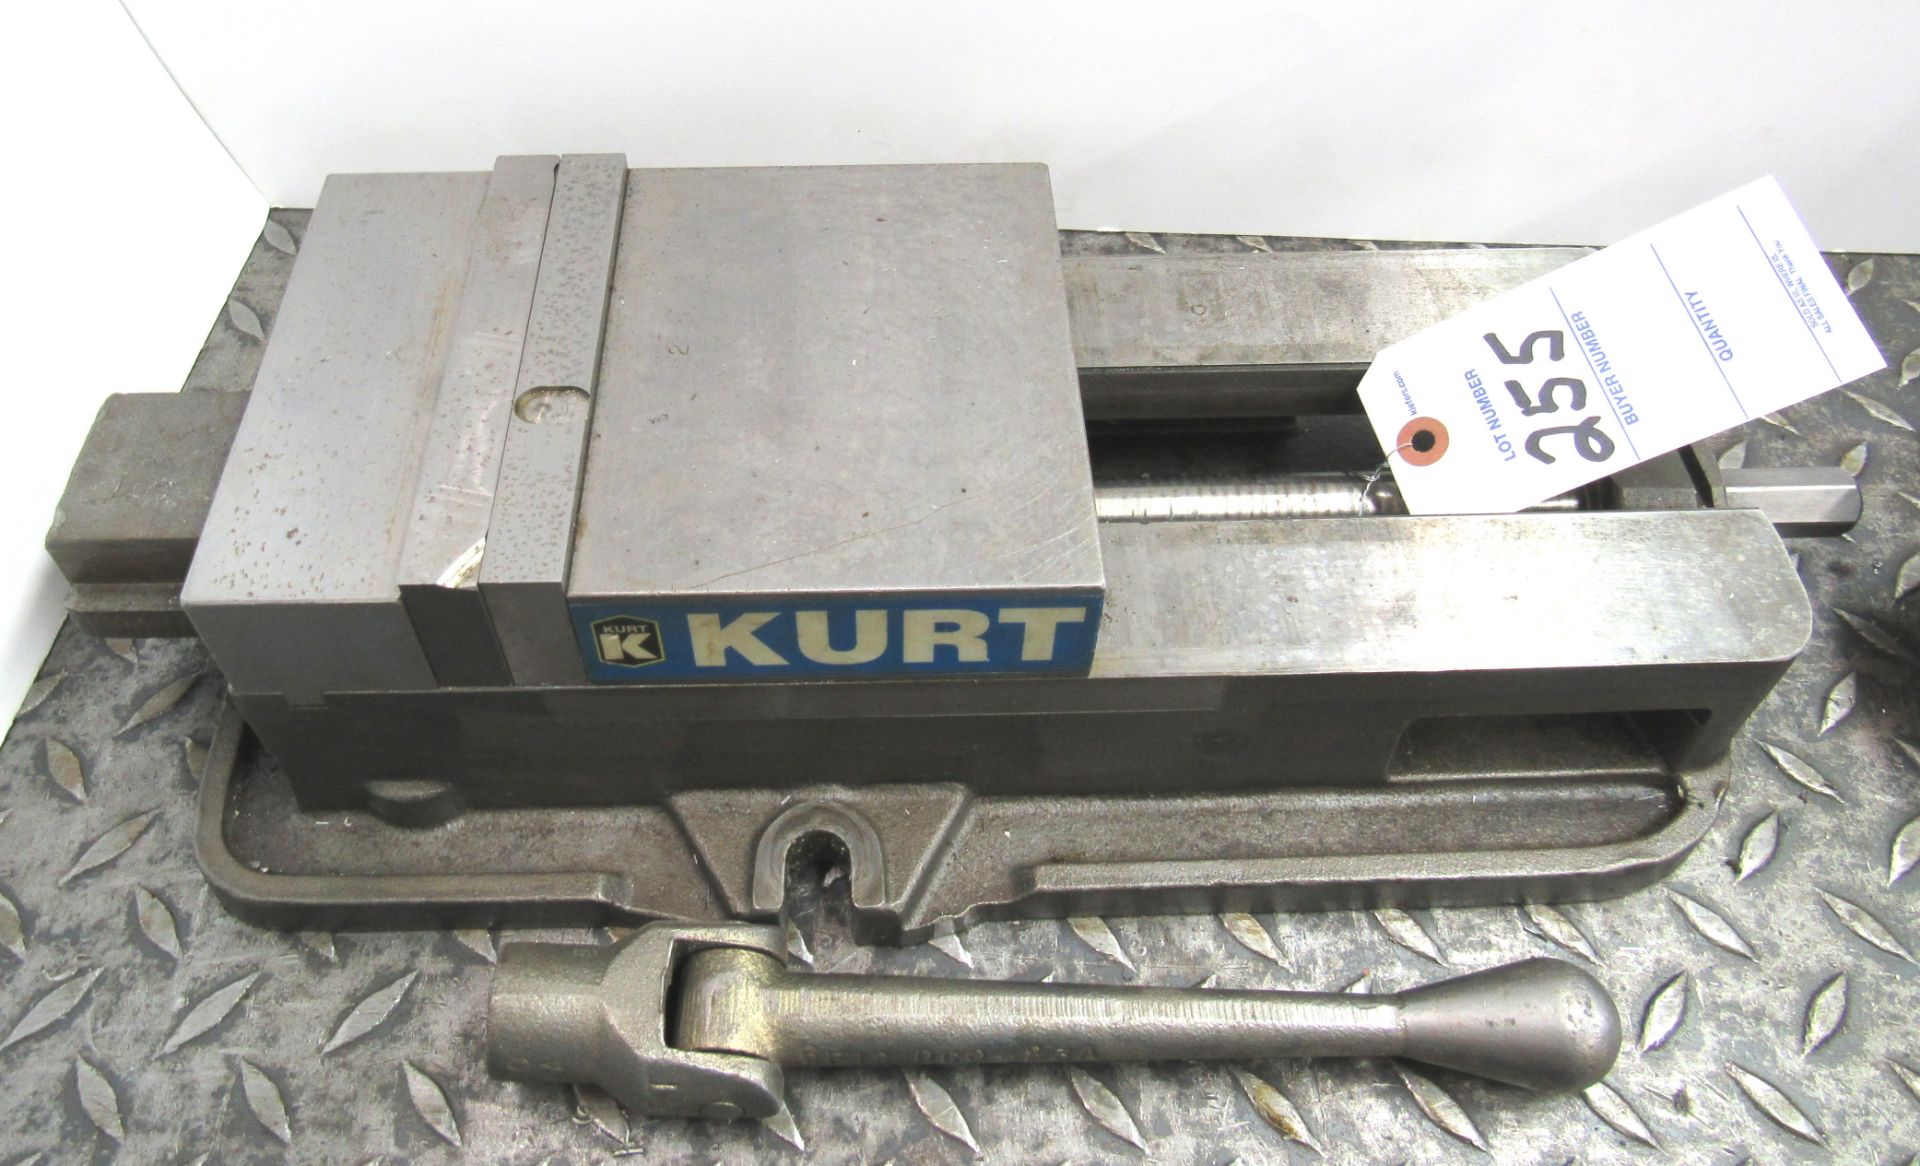 6" Kurt Model D675 Machine Vise